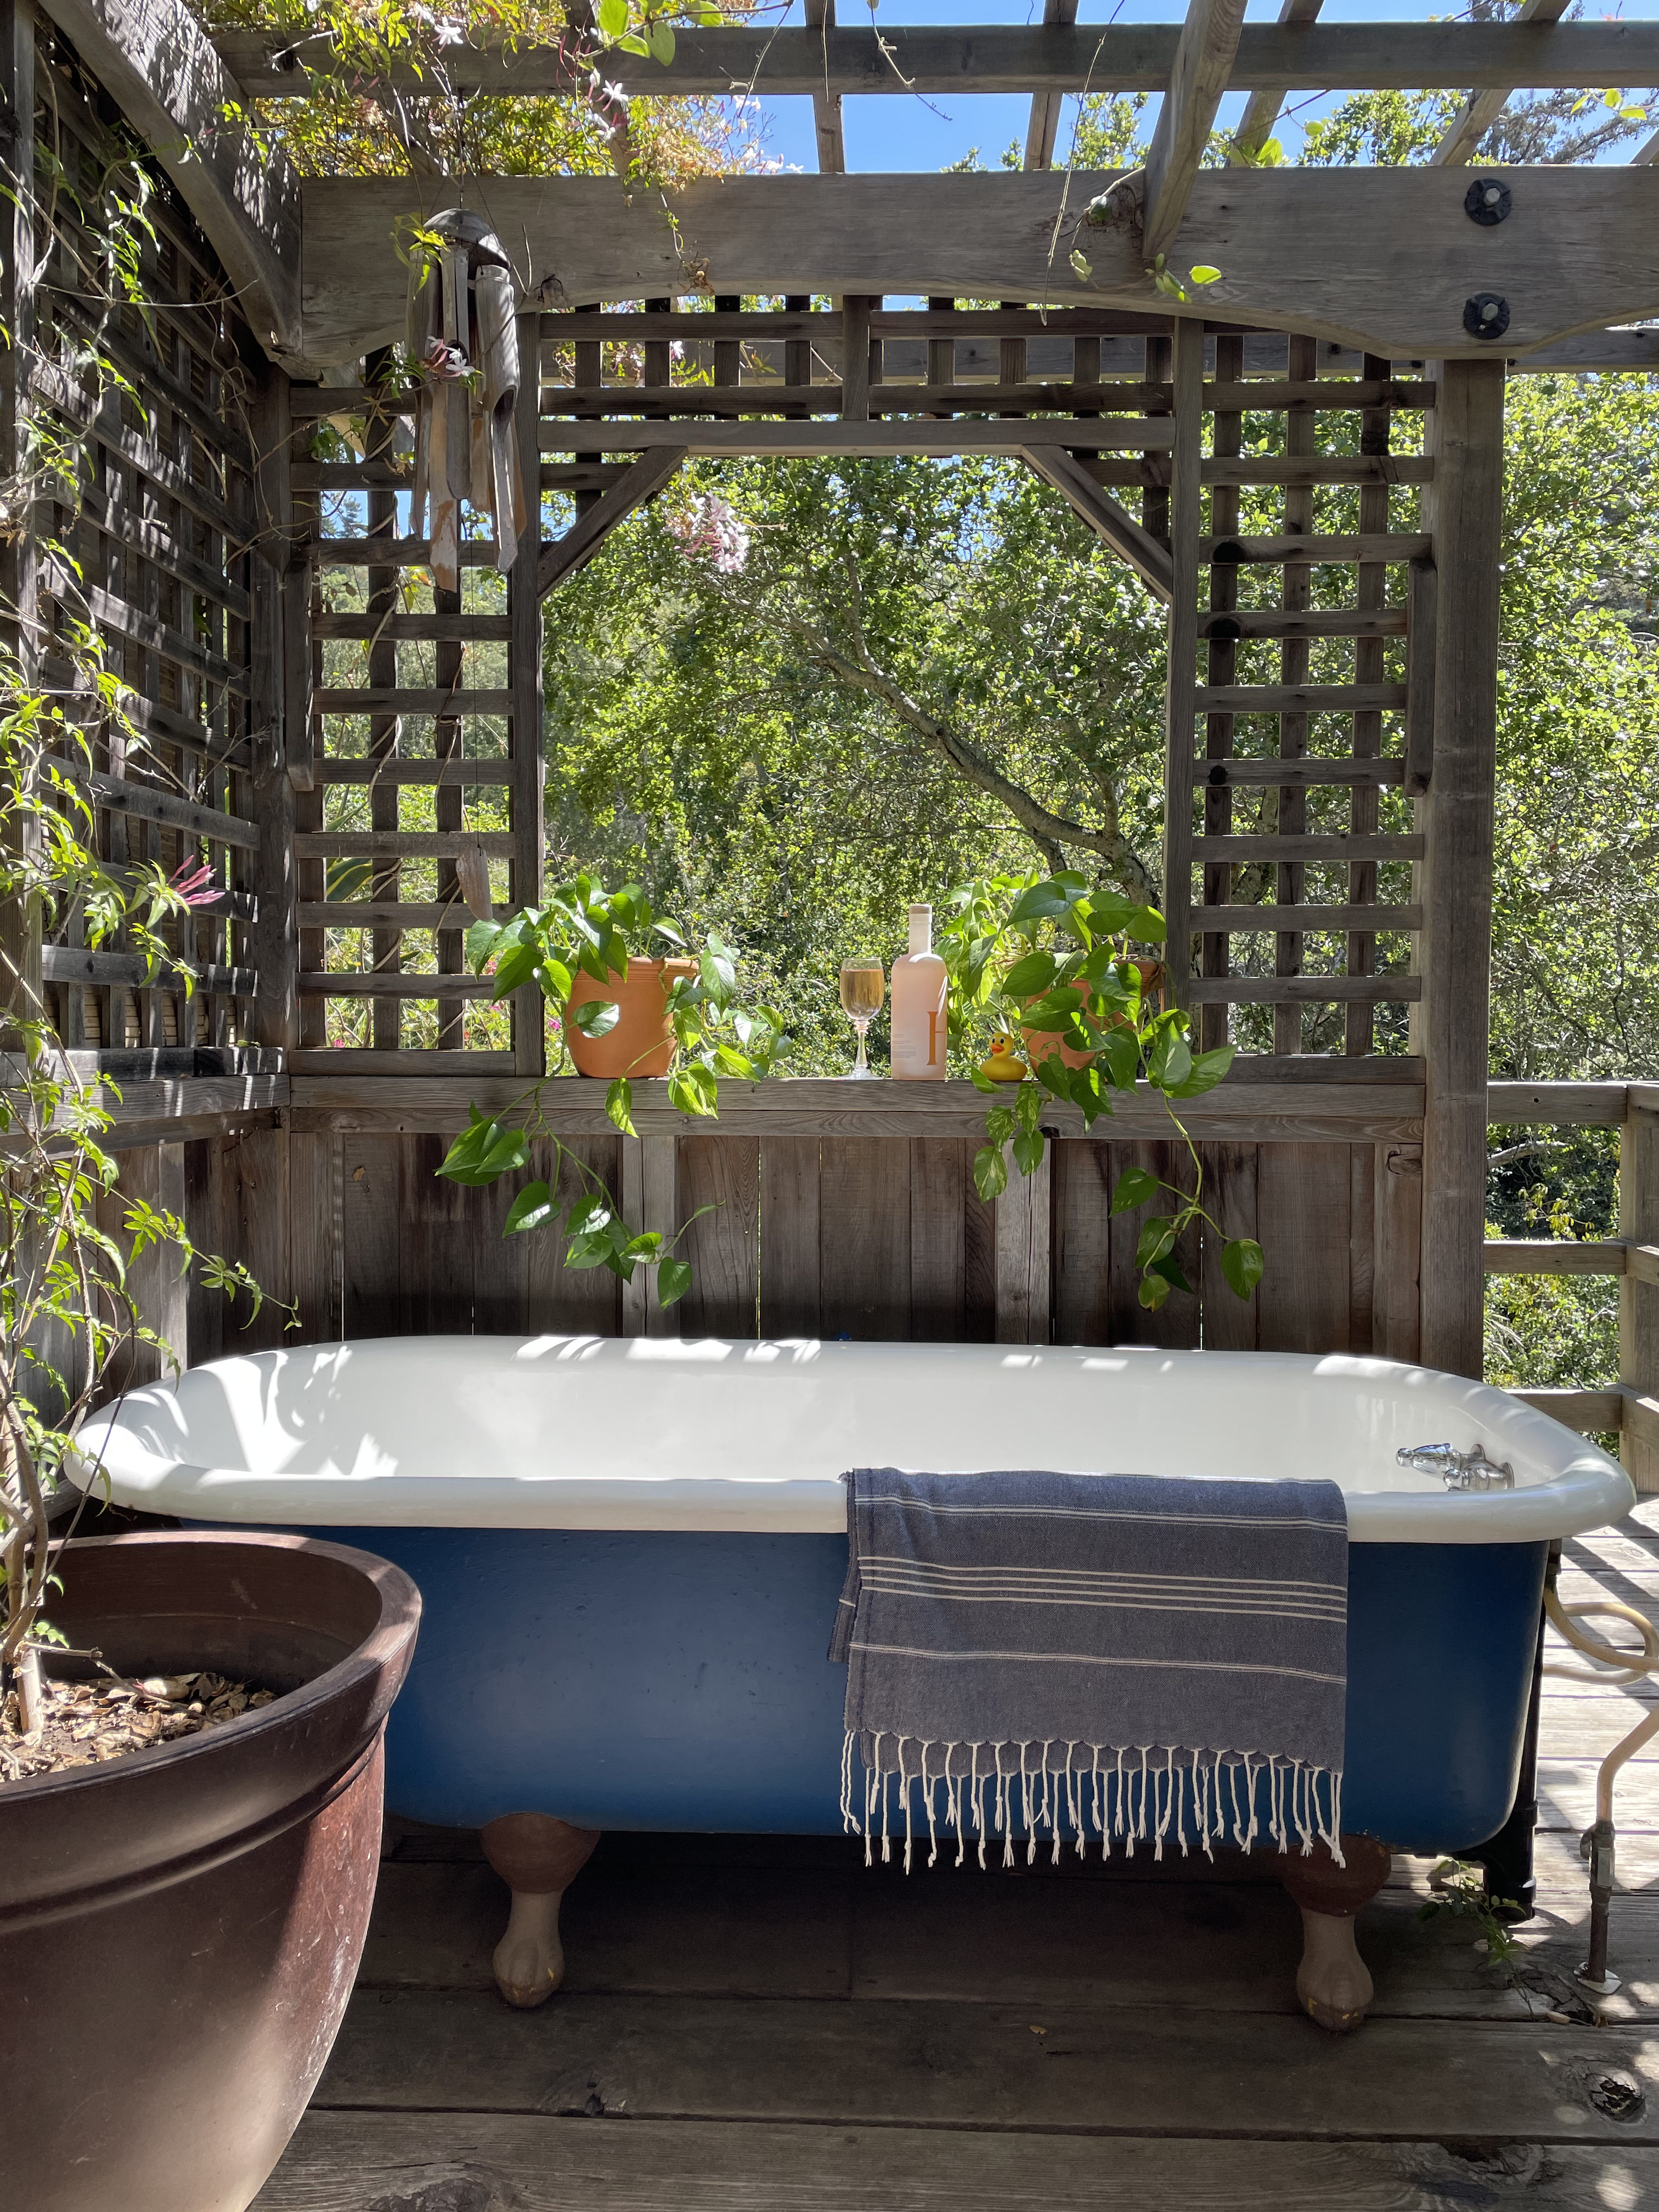 An Outdoor Bathtub Is The Sensory, Outdoor Bathtub Airbnb